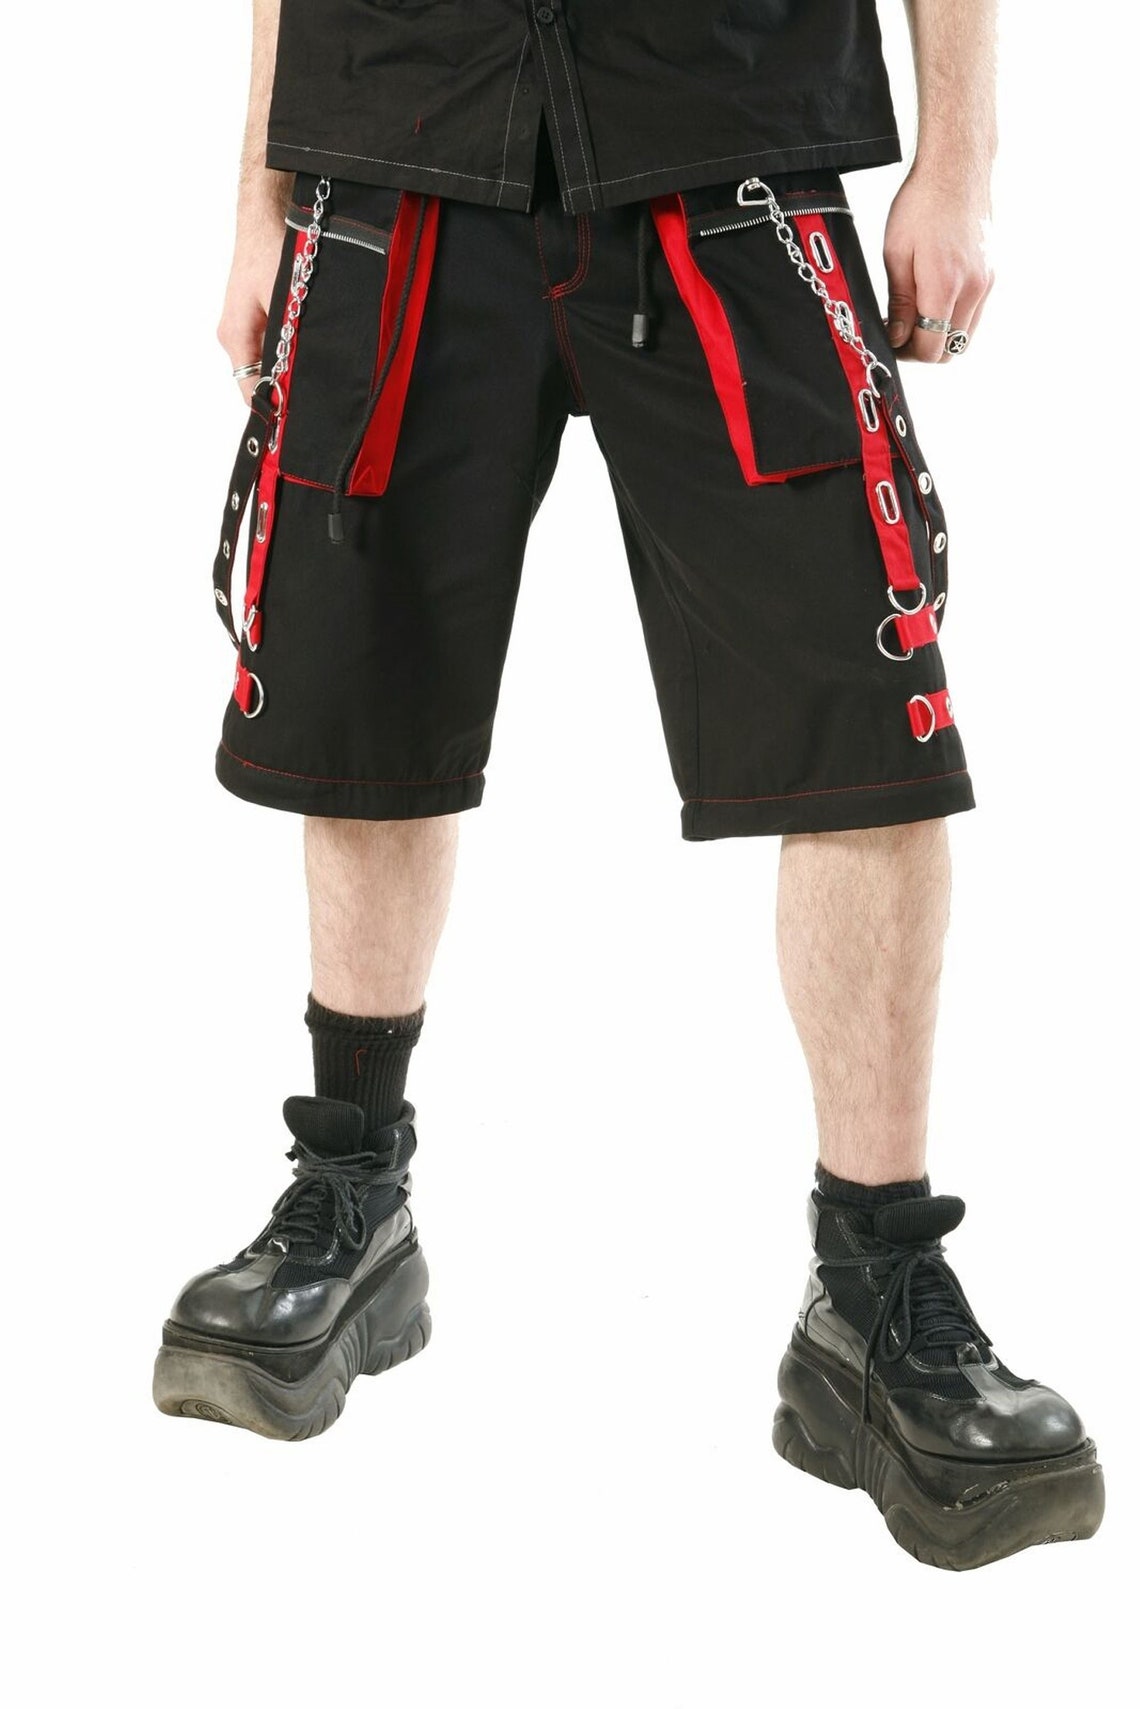 Bondage Trouser Punk Rock Transformer Black Red Gothic Men's Trousers